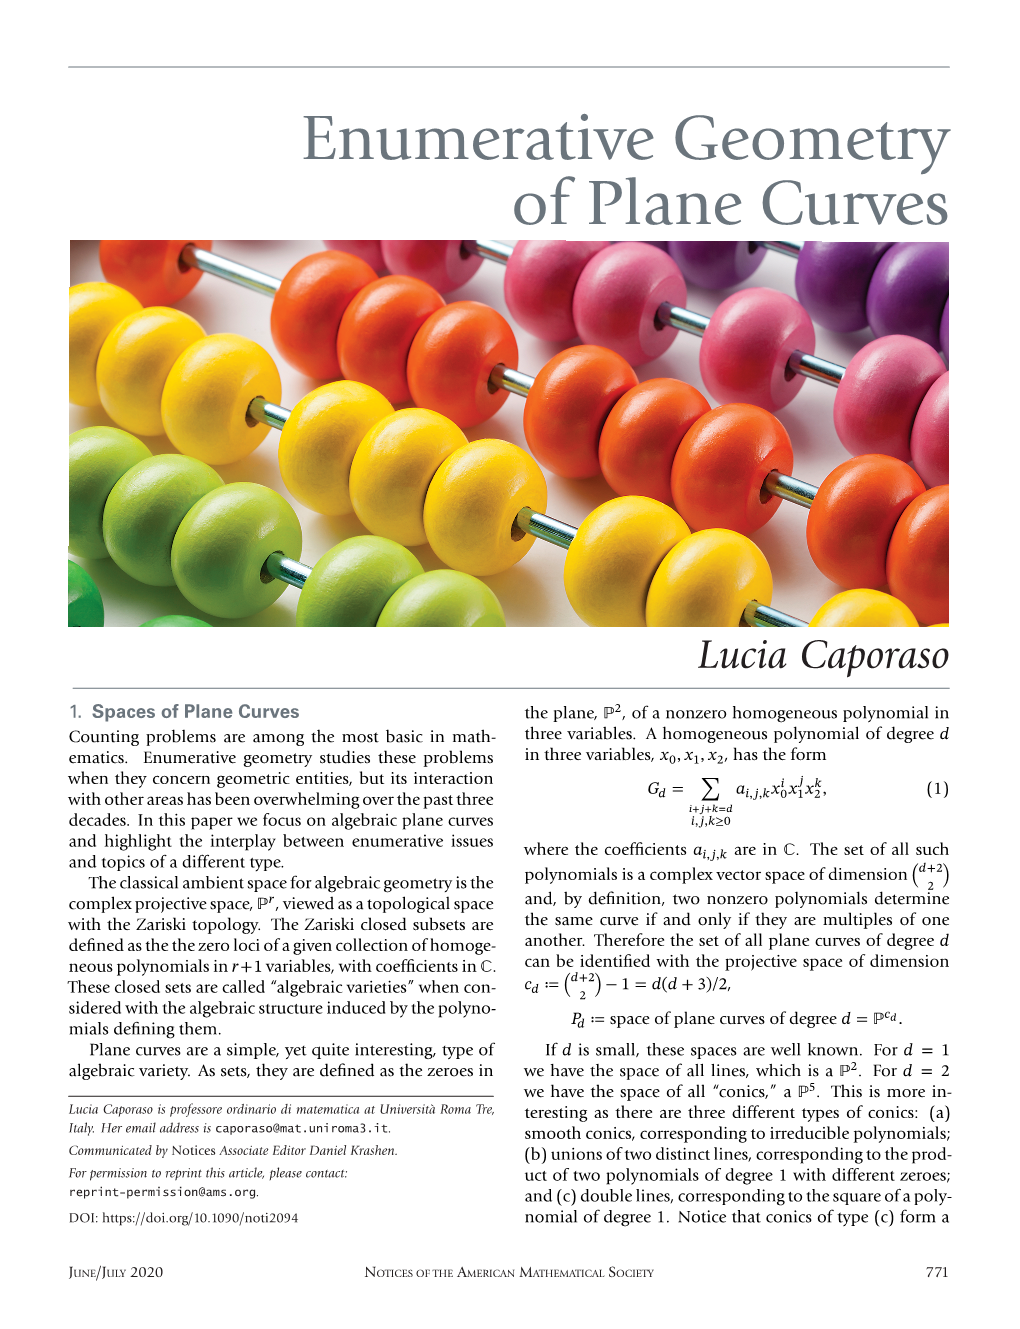 Enumerative Geometry of Plane Curves